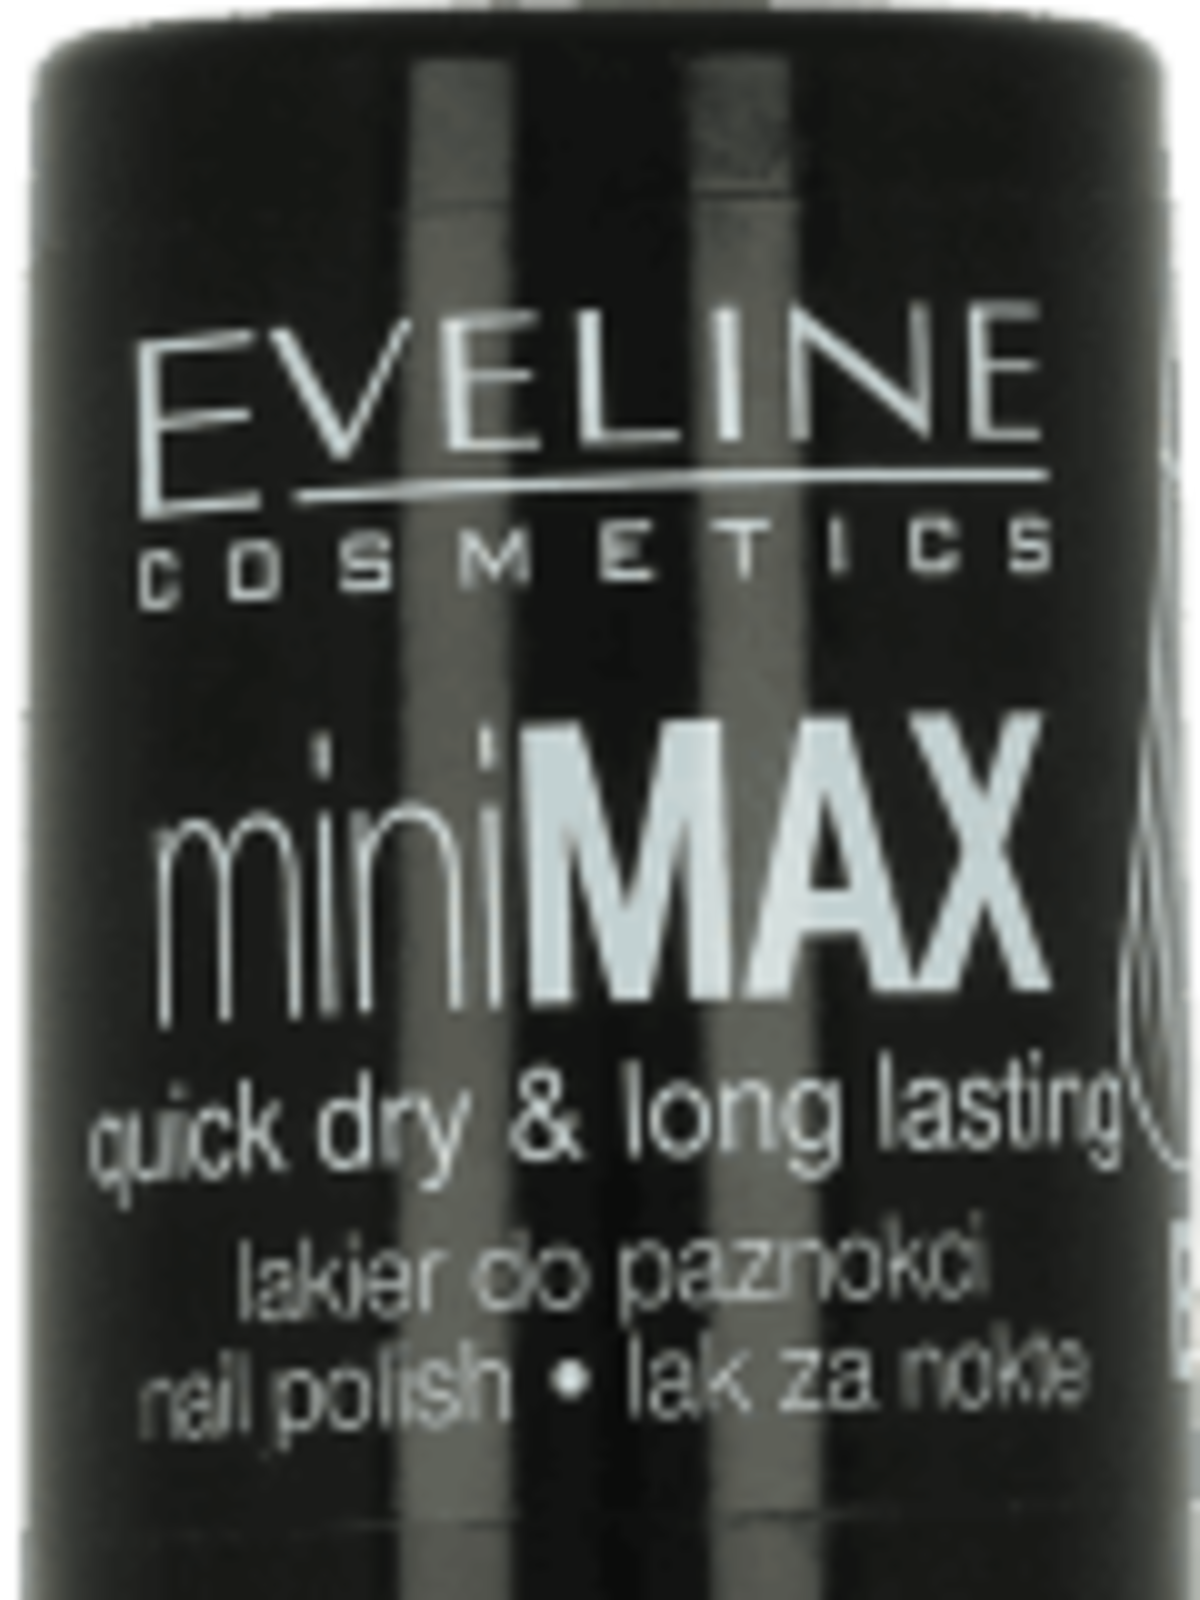 Eveline, MiniMAX quick dry & long lasting